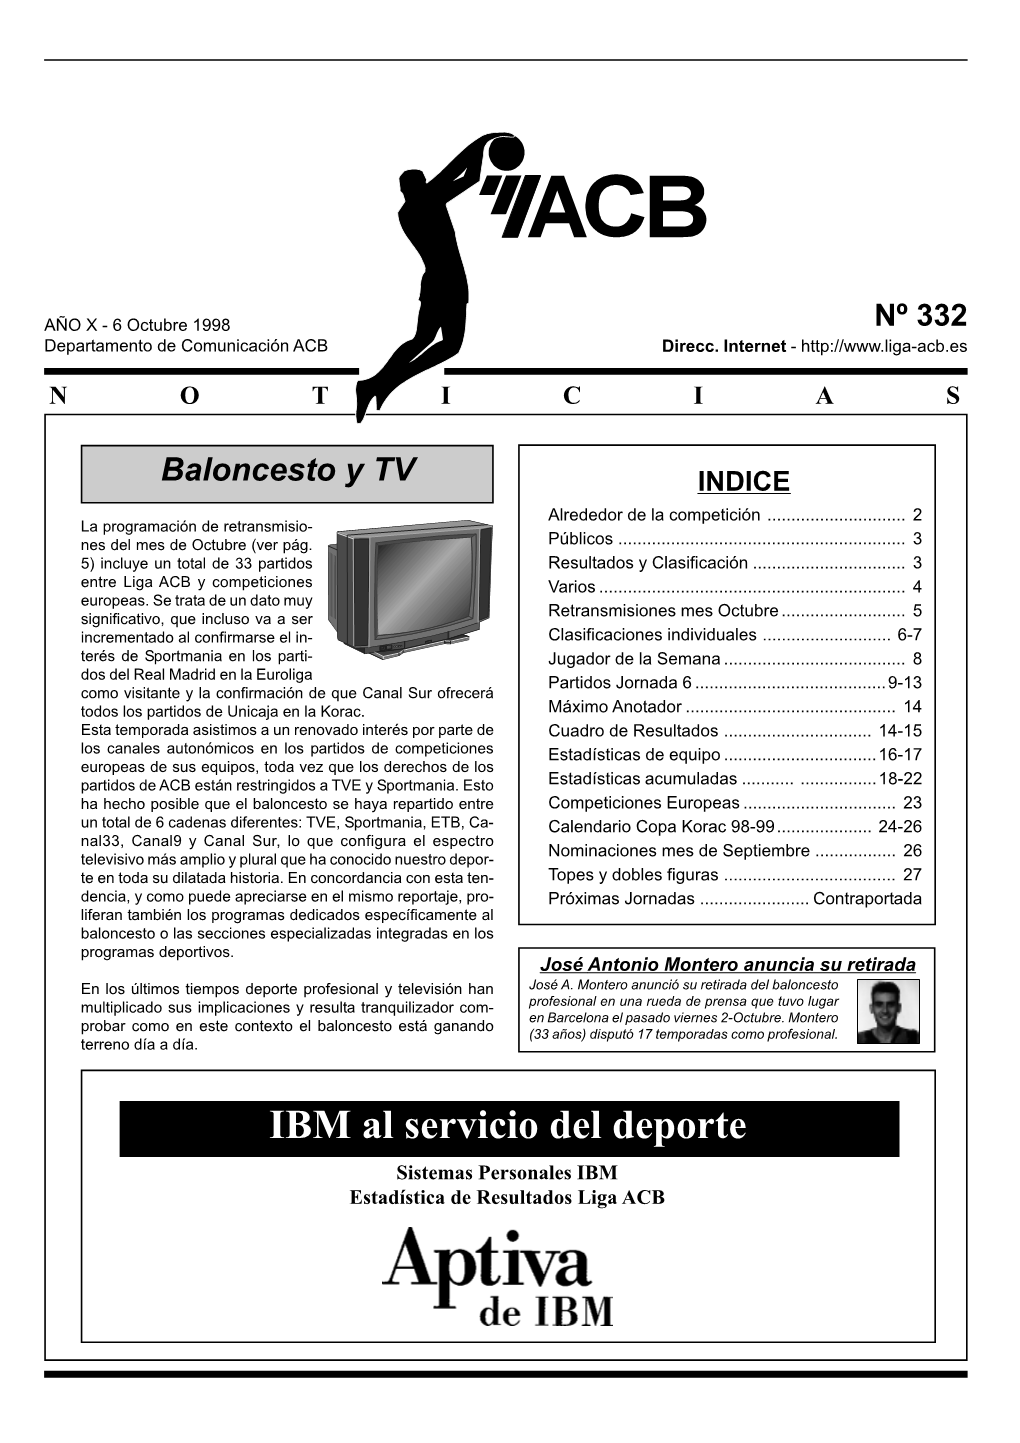 Nº 332 ACB Noticias Digital